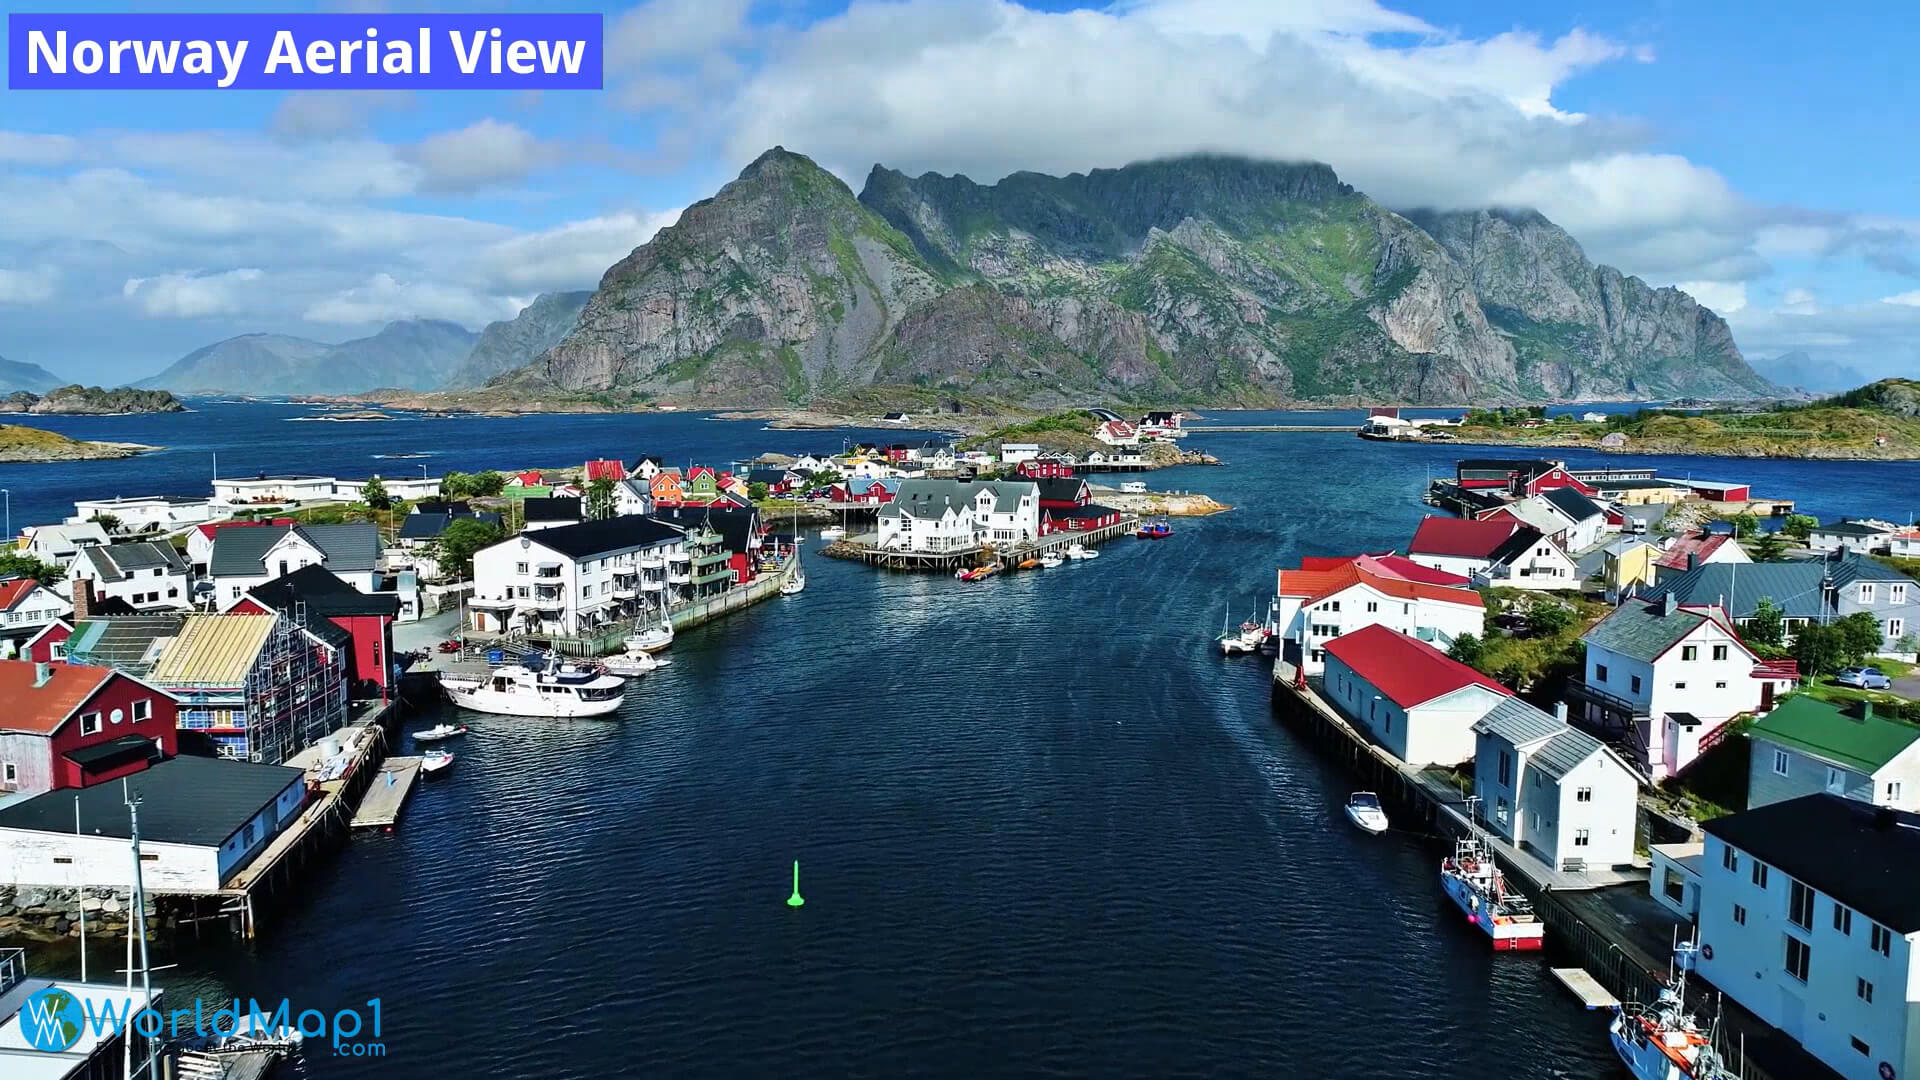 Norway Aerial View